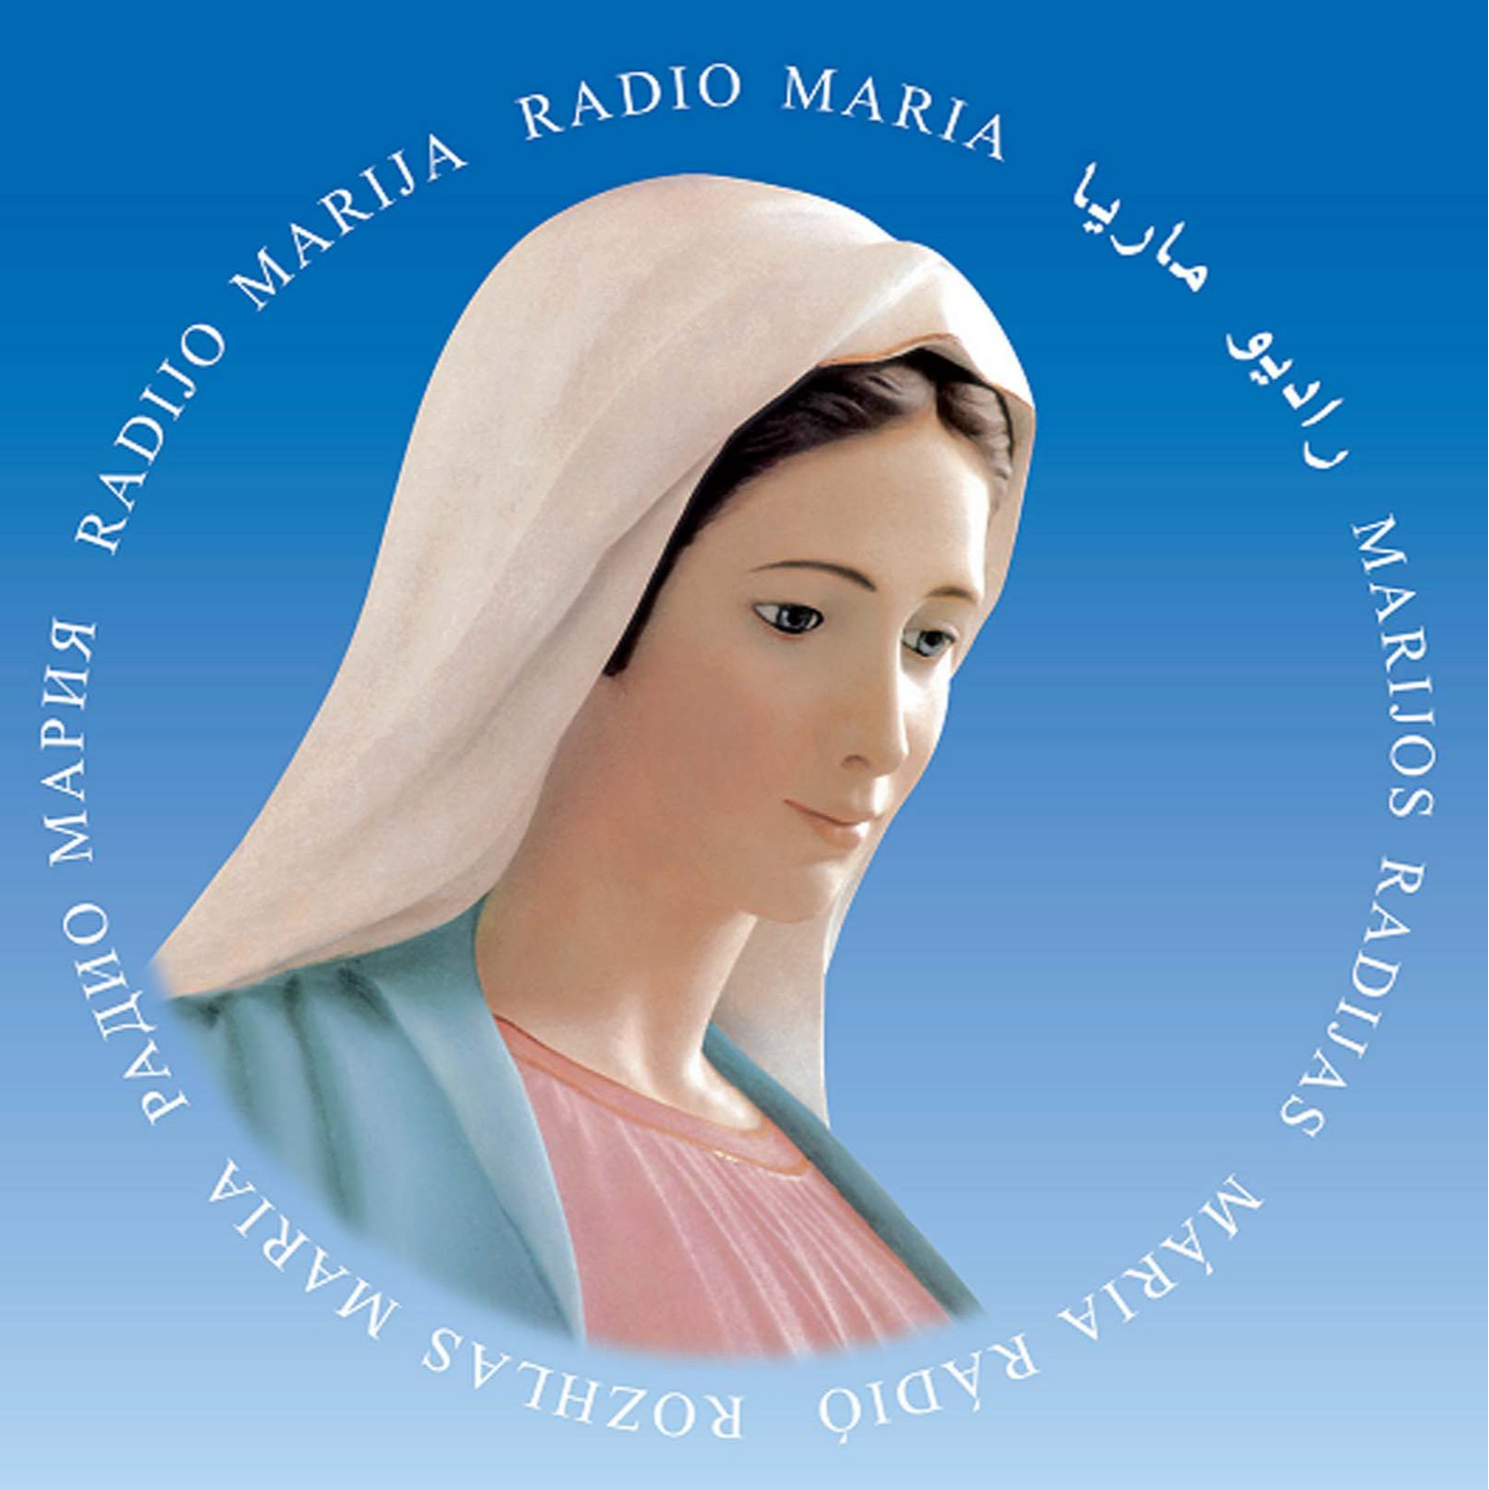 Radio Maria Tarlac 2